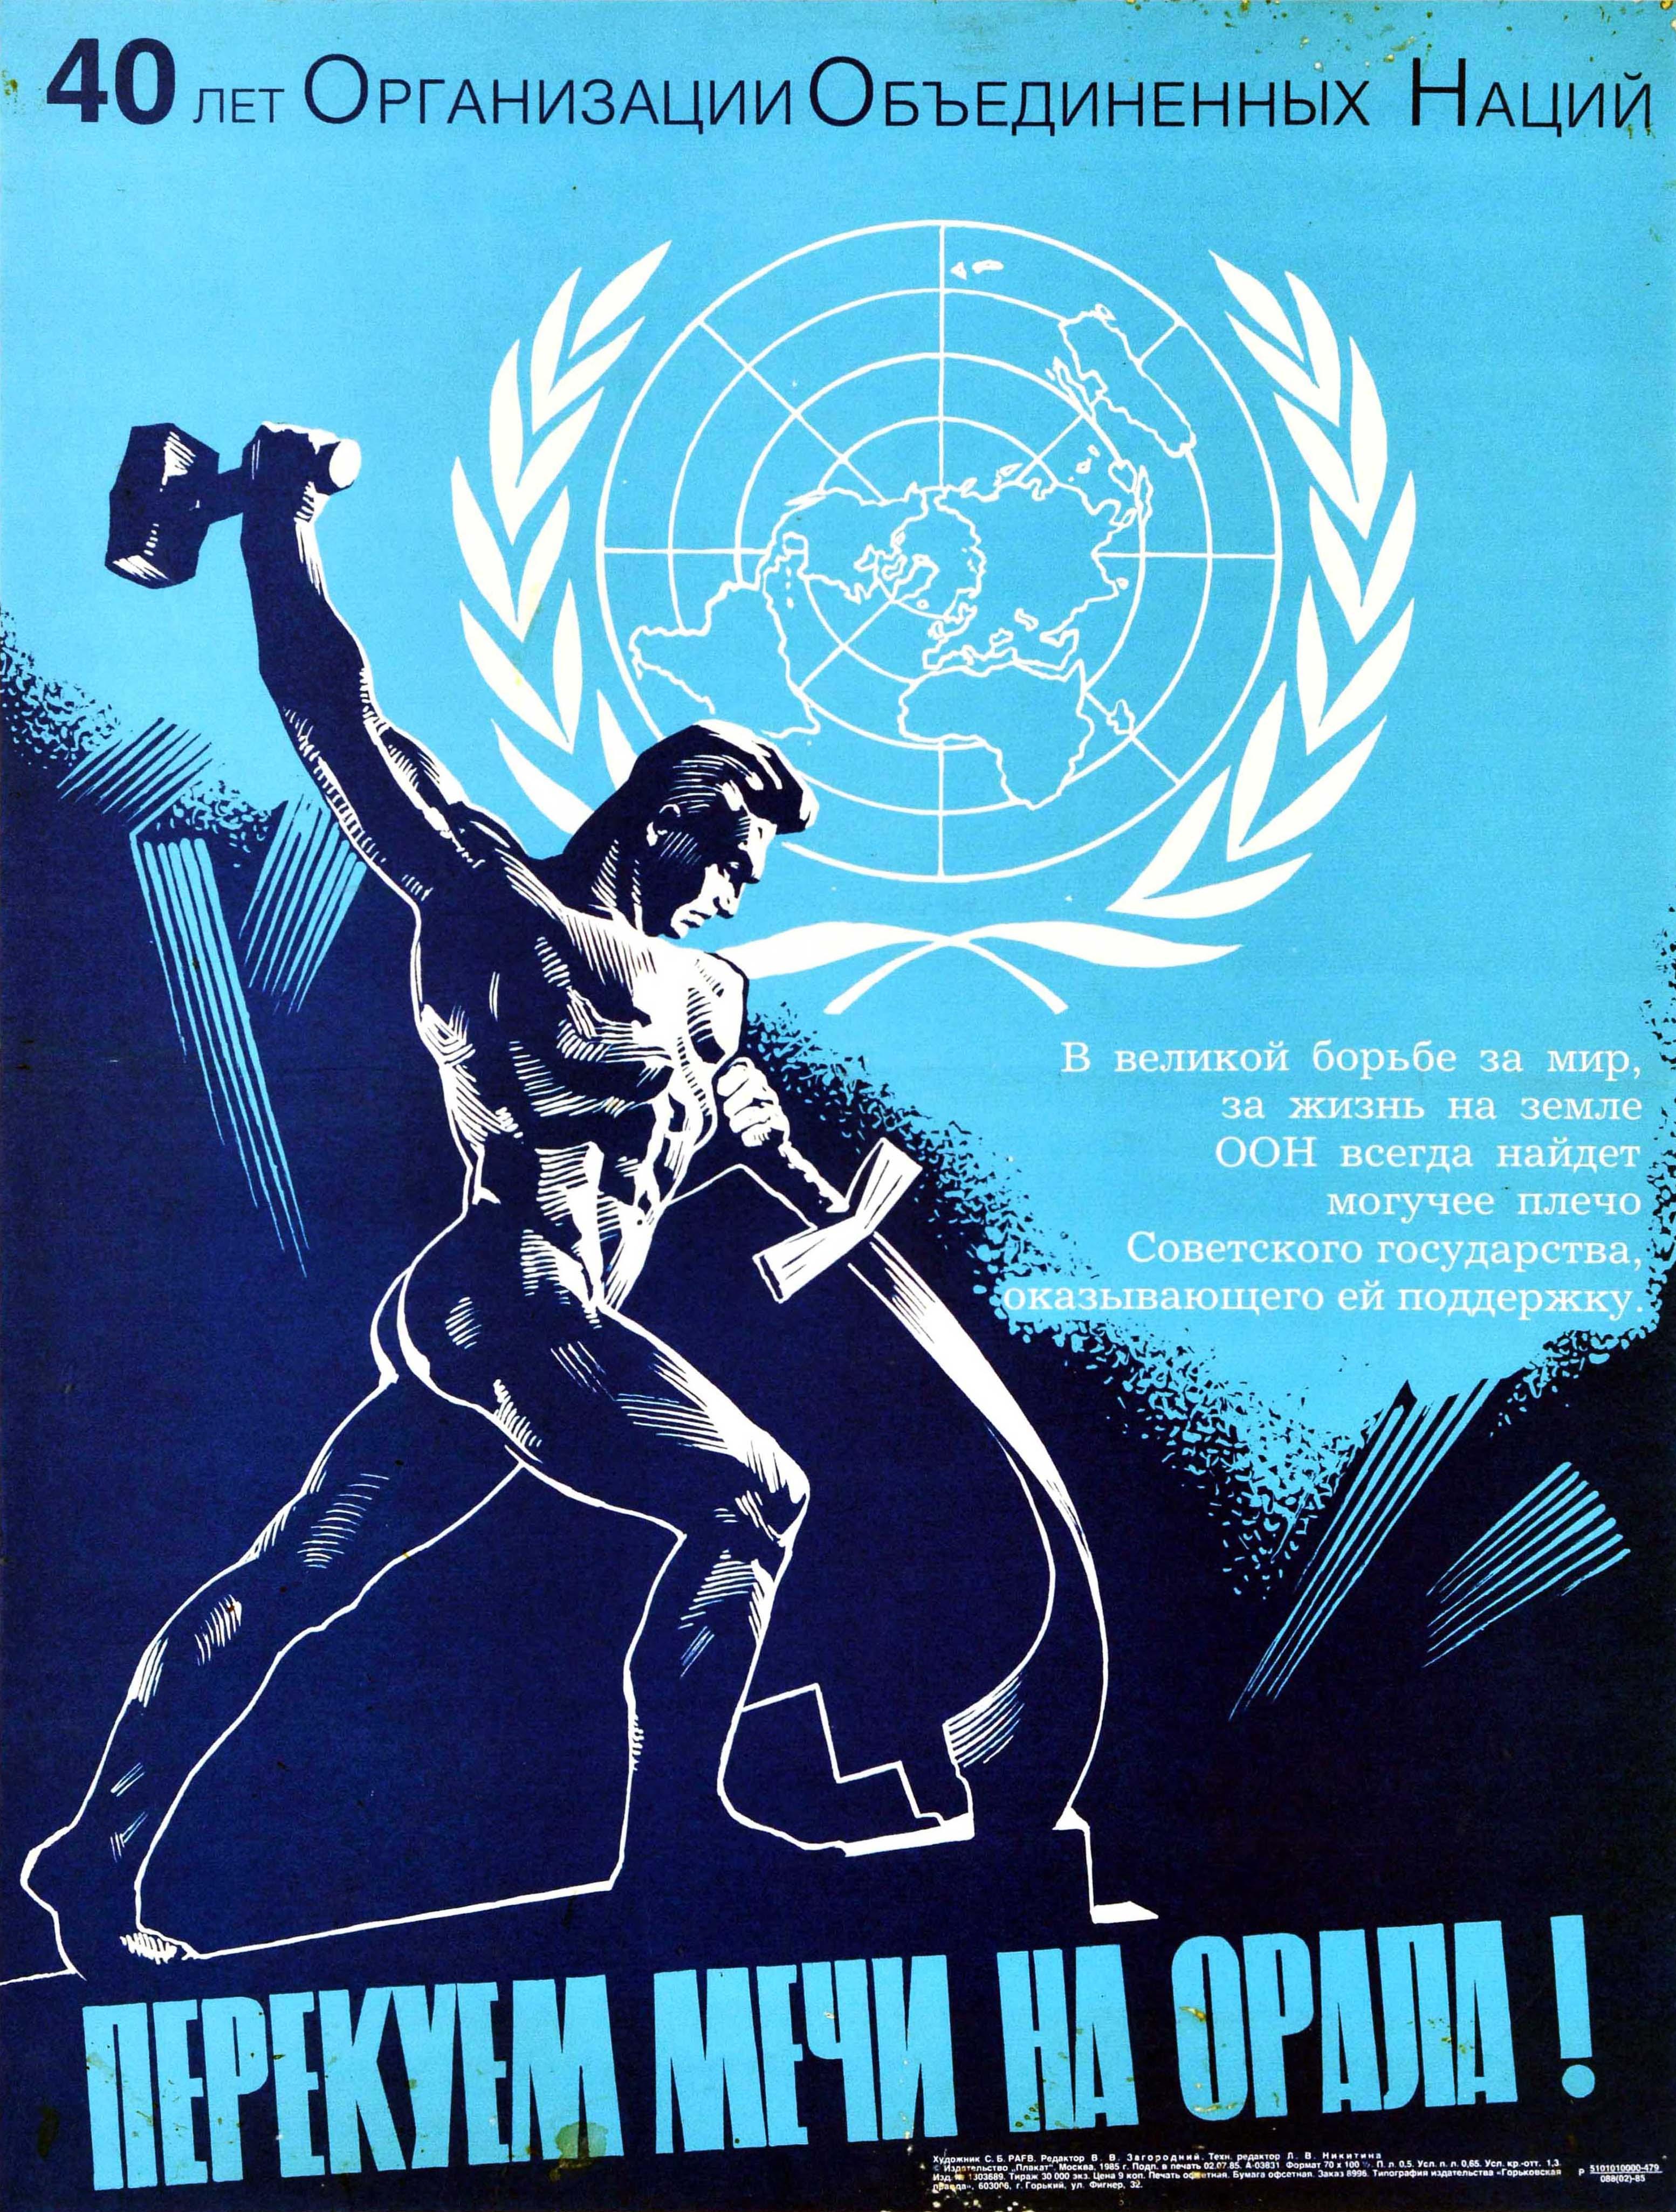 Unknown Print - Original Vintage Soviet Poster United Nations Anniversary USSR UN Sword Plough